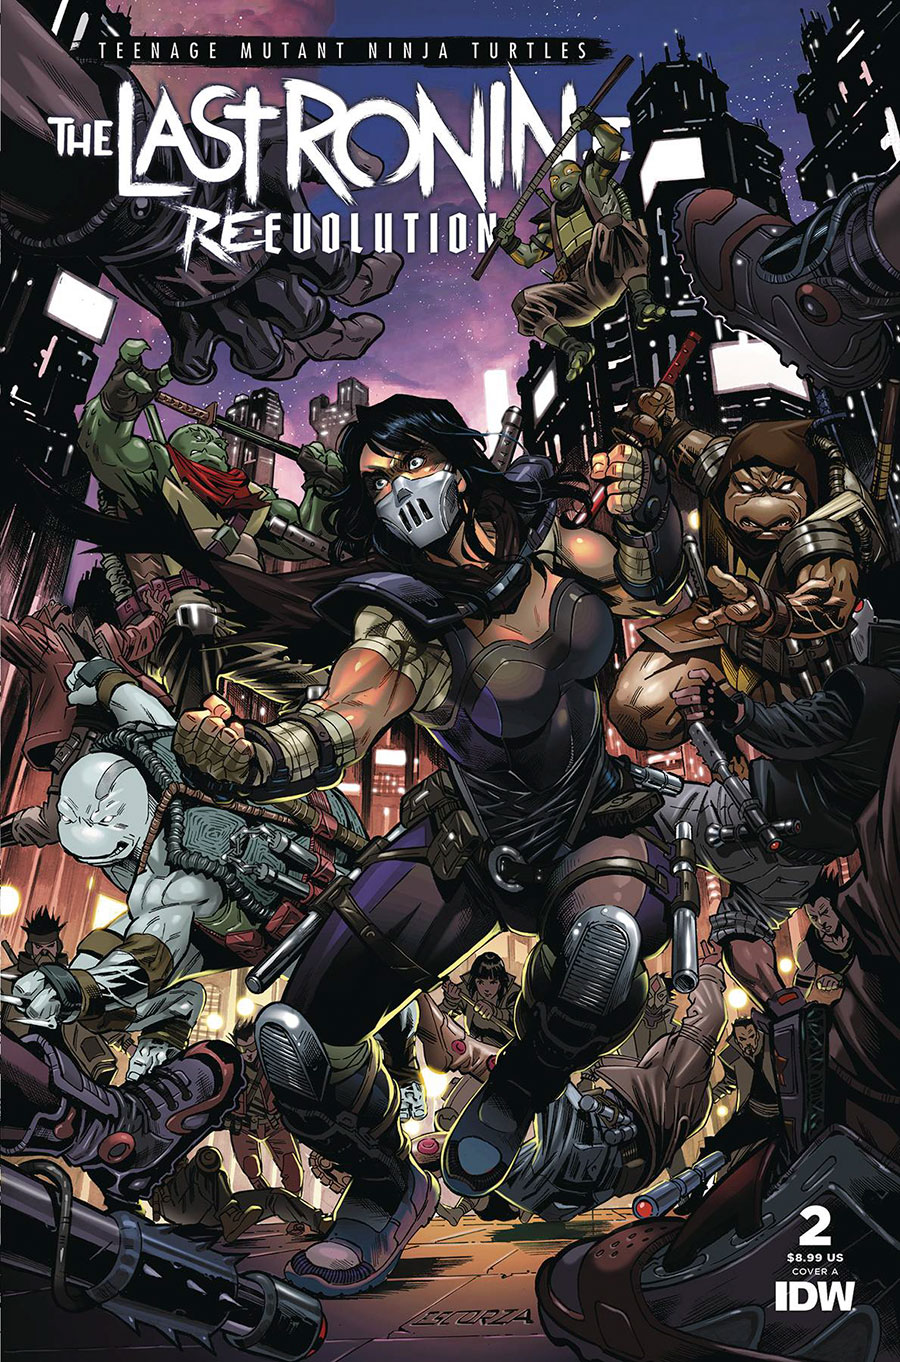 Teenage Mutant Ninja Turtles The Last Ronin II Re-Evolution #2 Cover A Regular Esau Escorza & Issac Escorza Cover